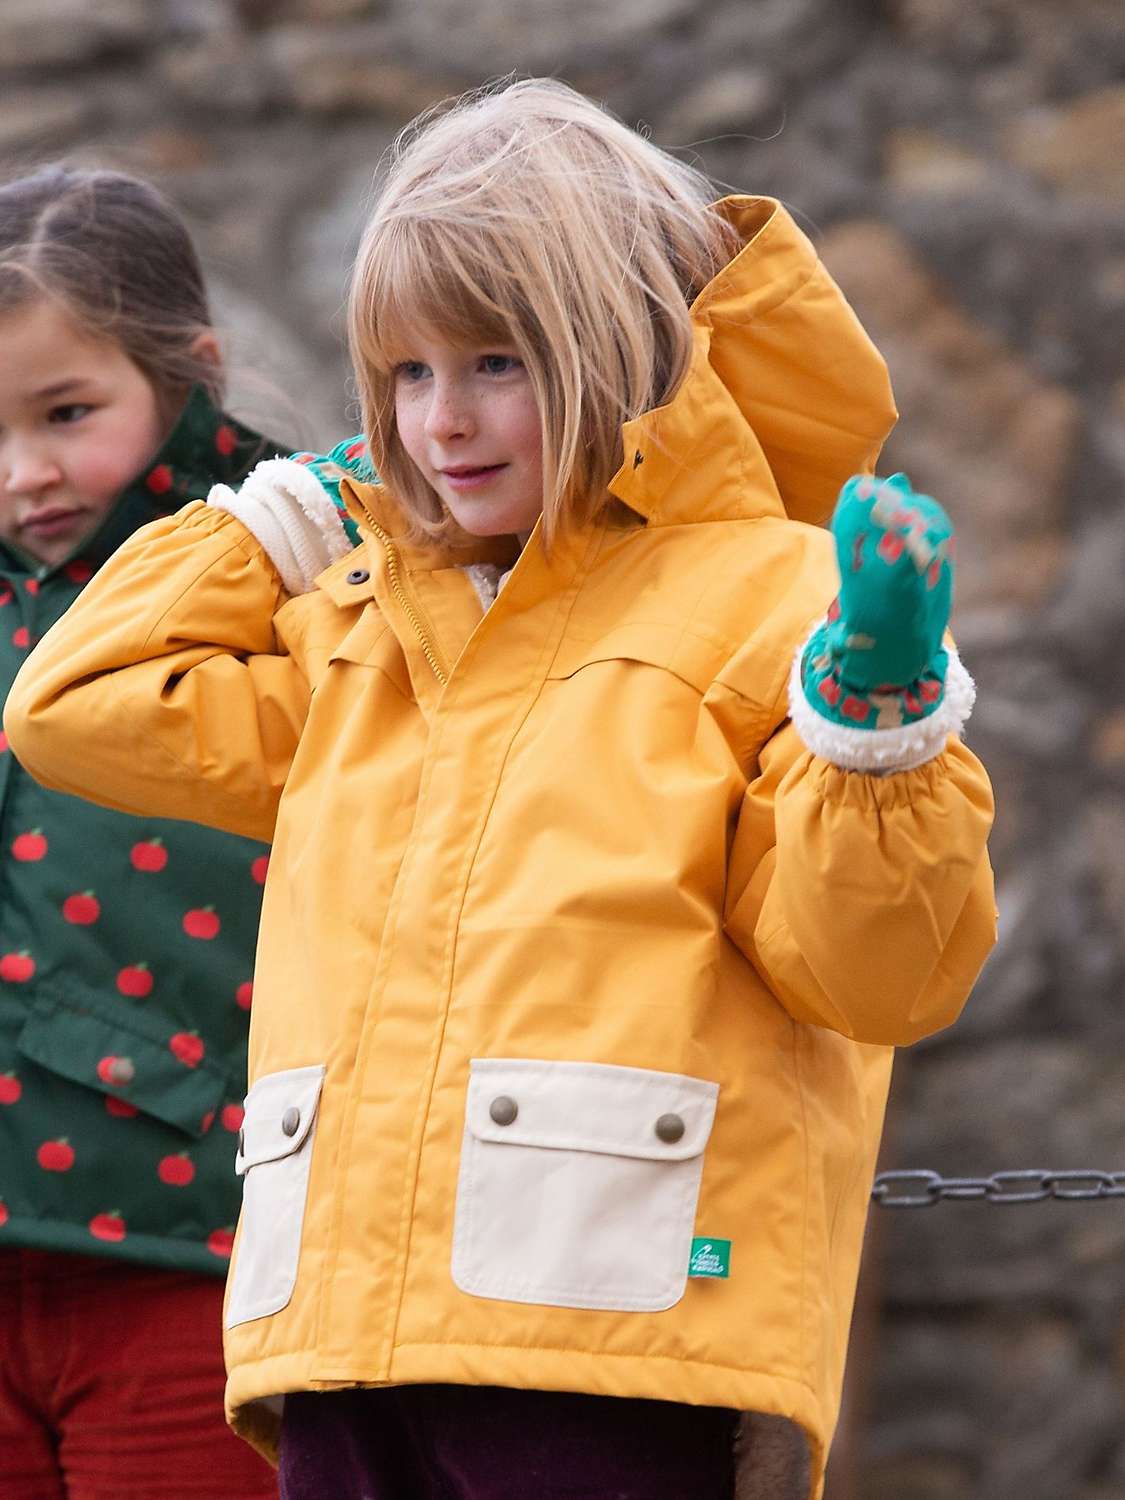 Buy Little Green Radicals Kids' Recycled Waterproof Winter Coat Online at johnlewis.com